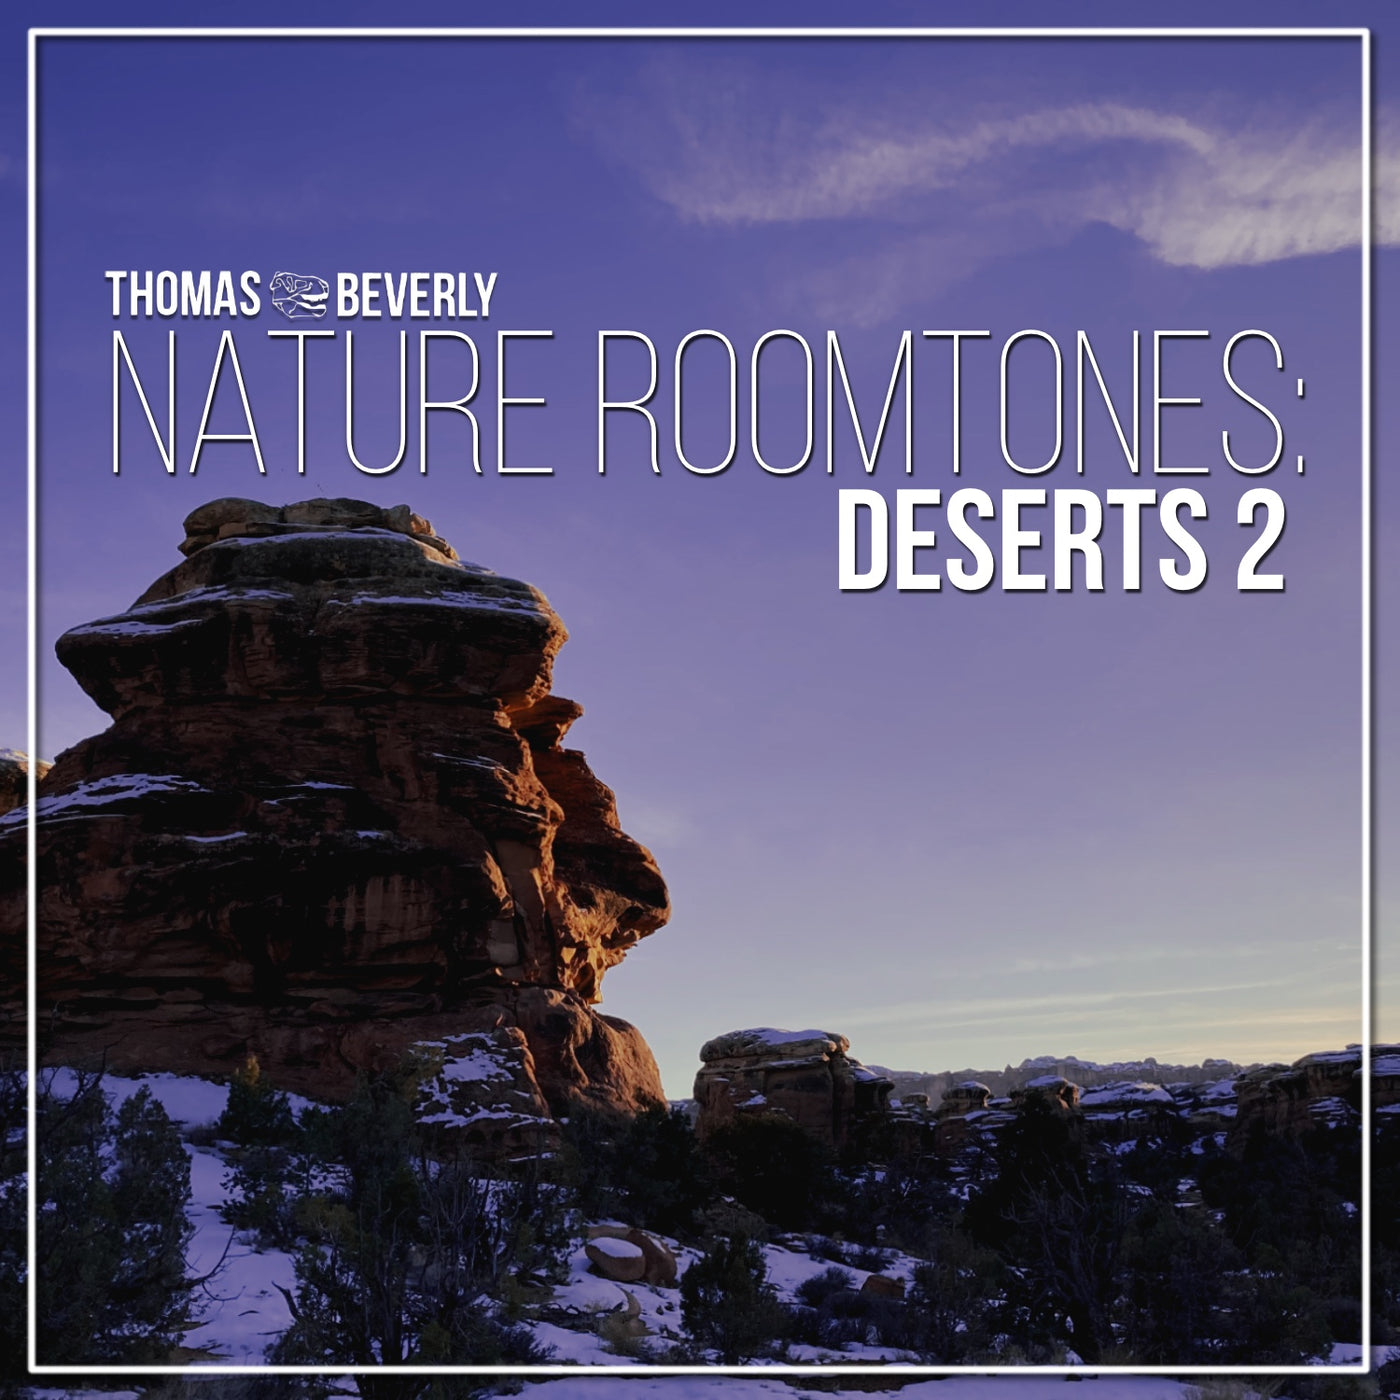 AMB48 Nature Roomtones: Deserts 2